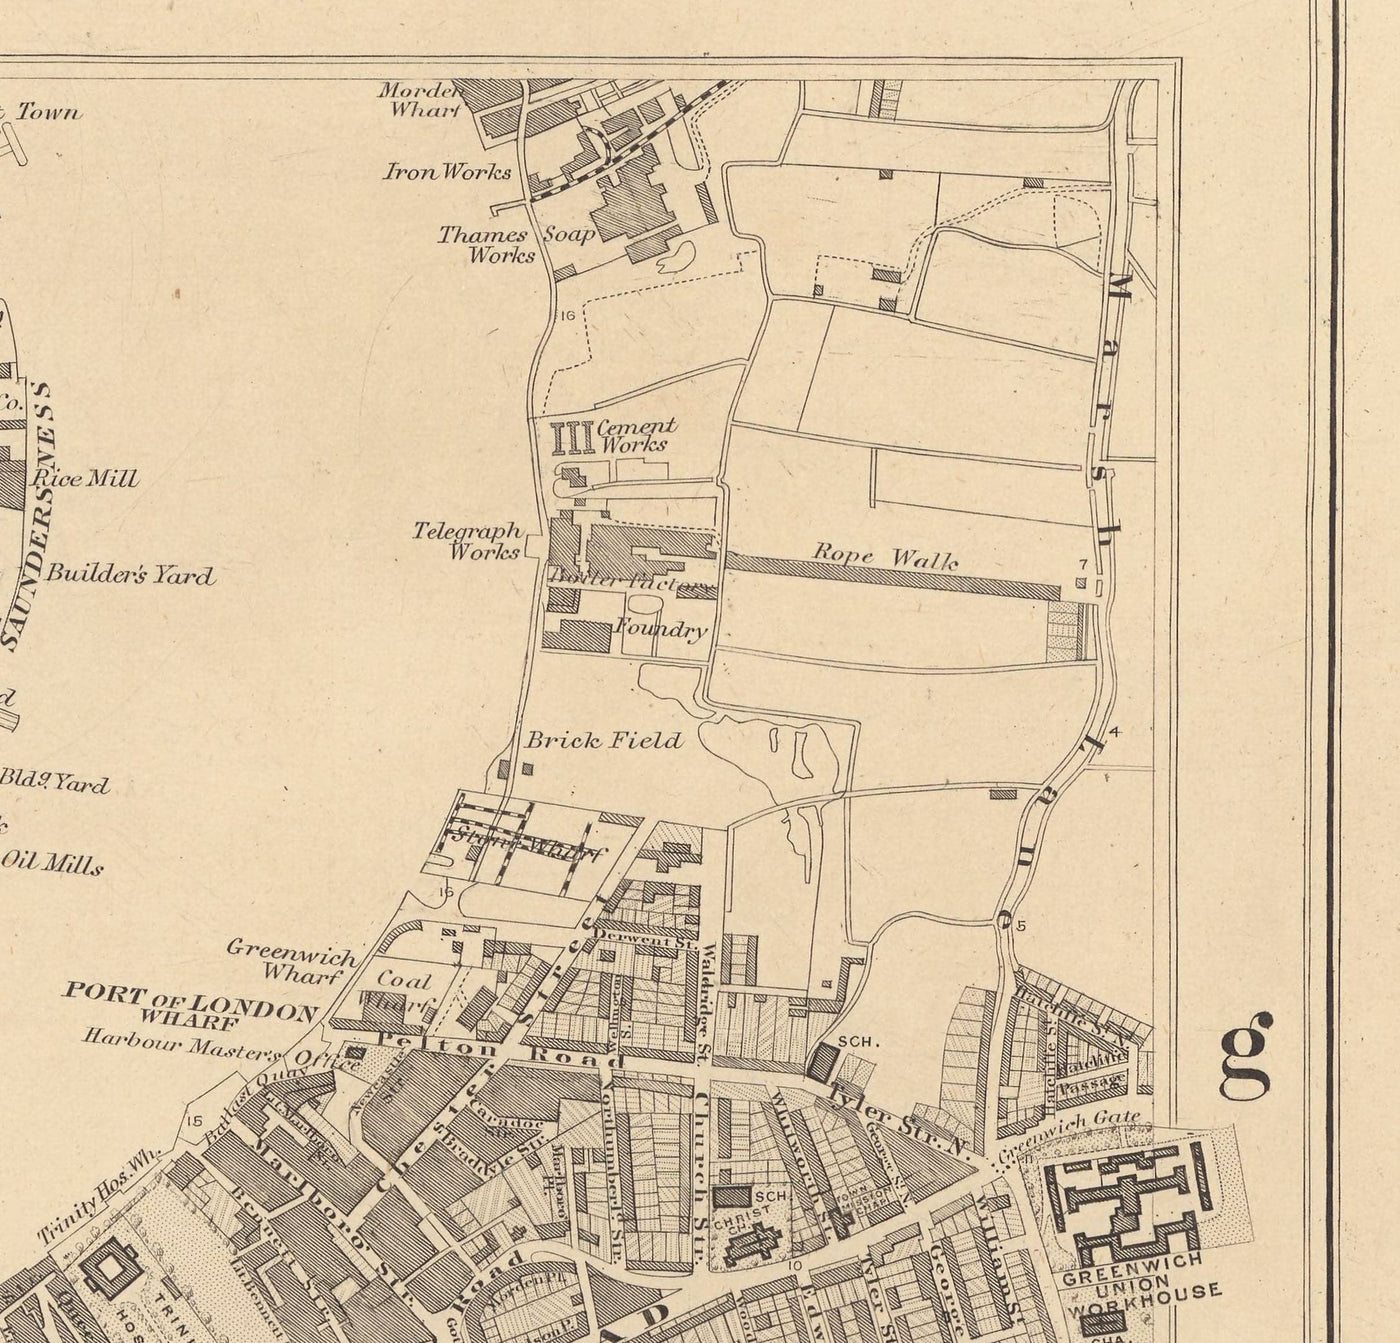 Old Map of South London in 1862 by Edward Stanford - Greenwich, Deptford, New Cross, Blackheath - SE8, SE14, SE10, SE4, SE13